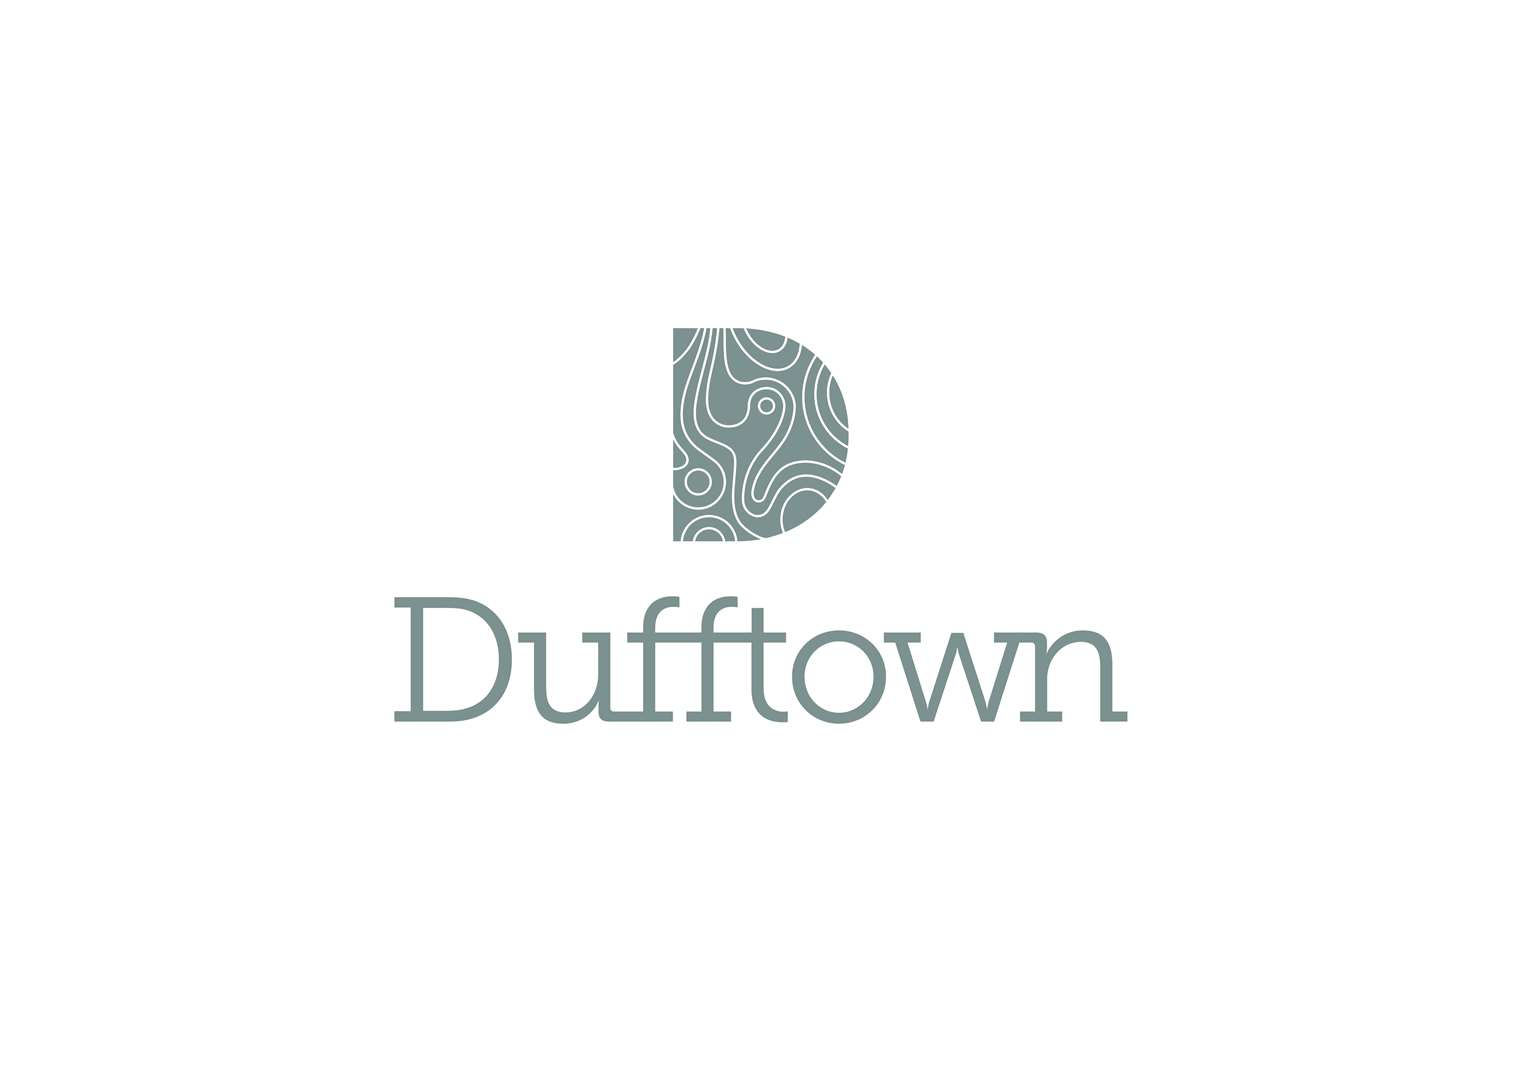 The new Destination Dufftown branding.